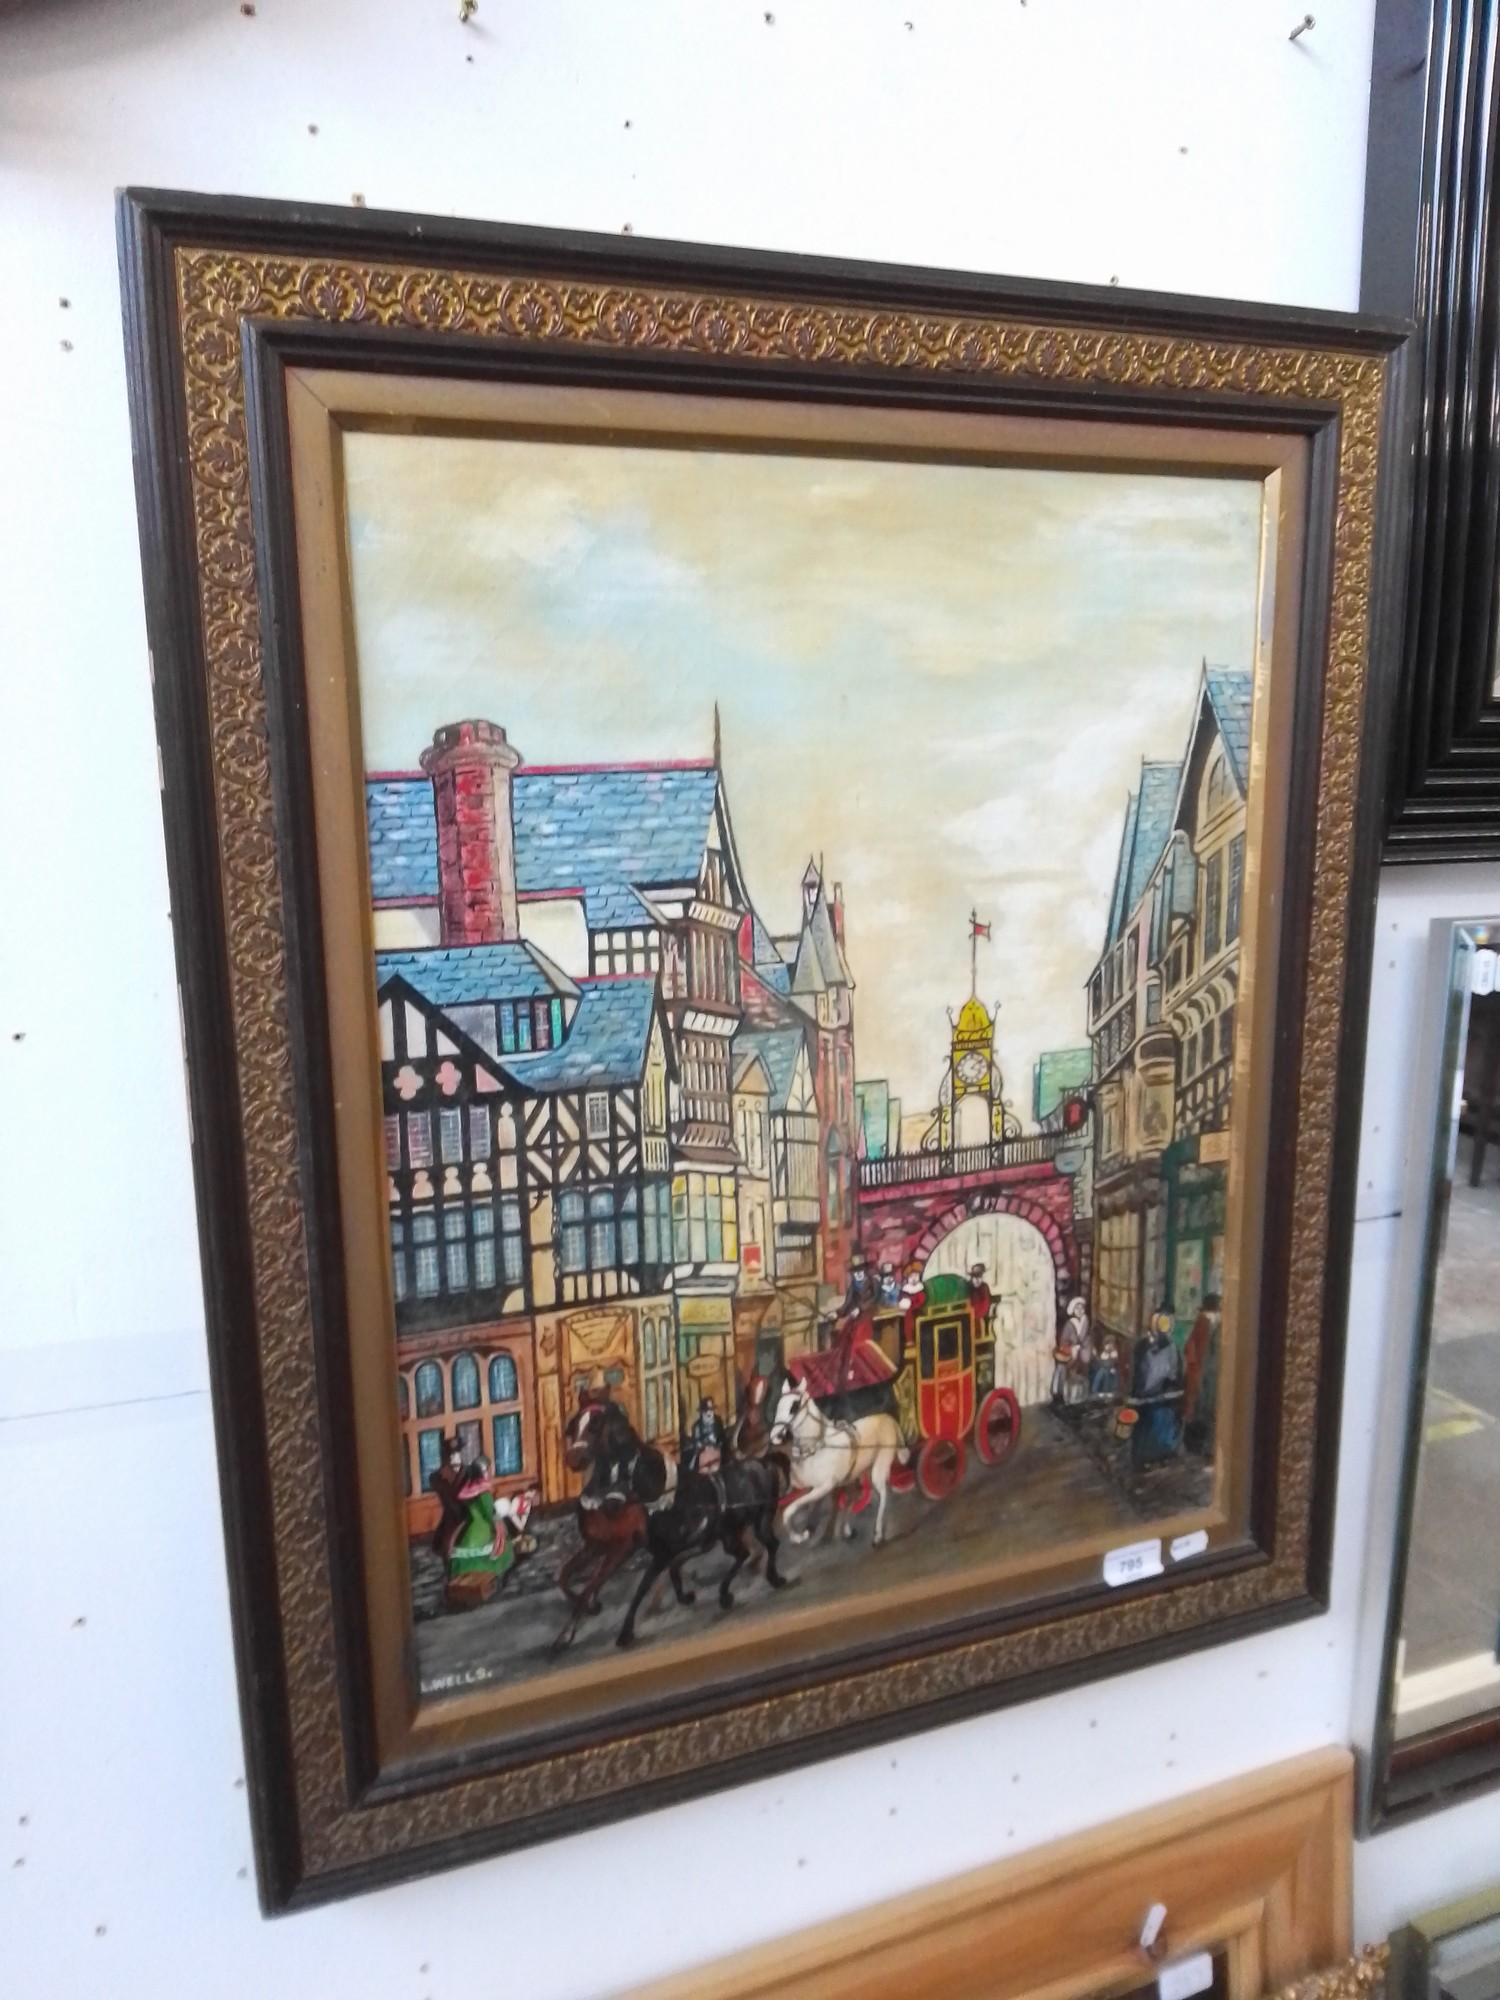 L. Wells, street scene, oil on canvas, 46cm x 48cm.